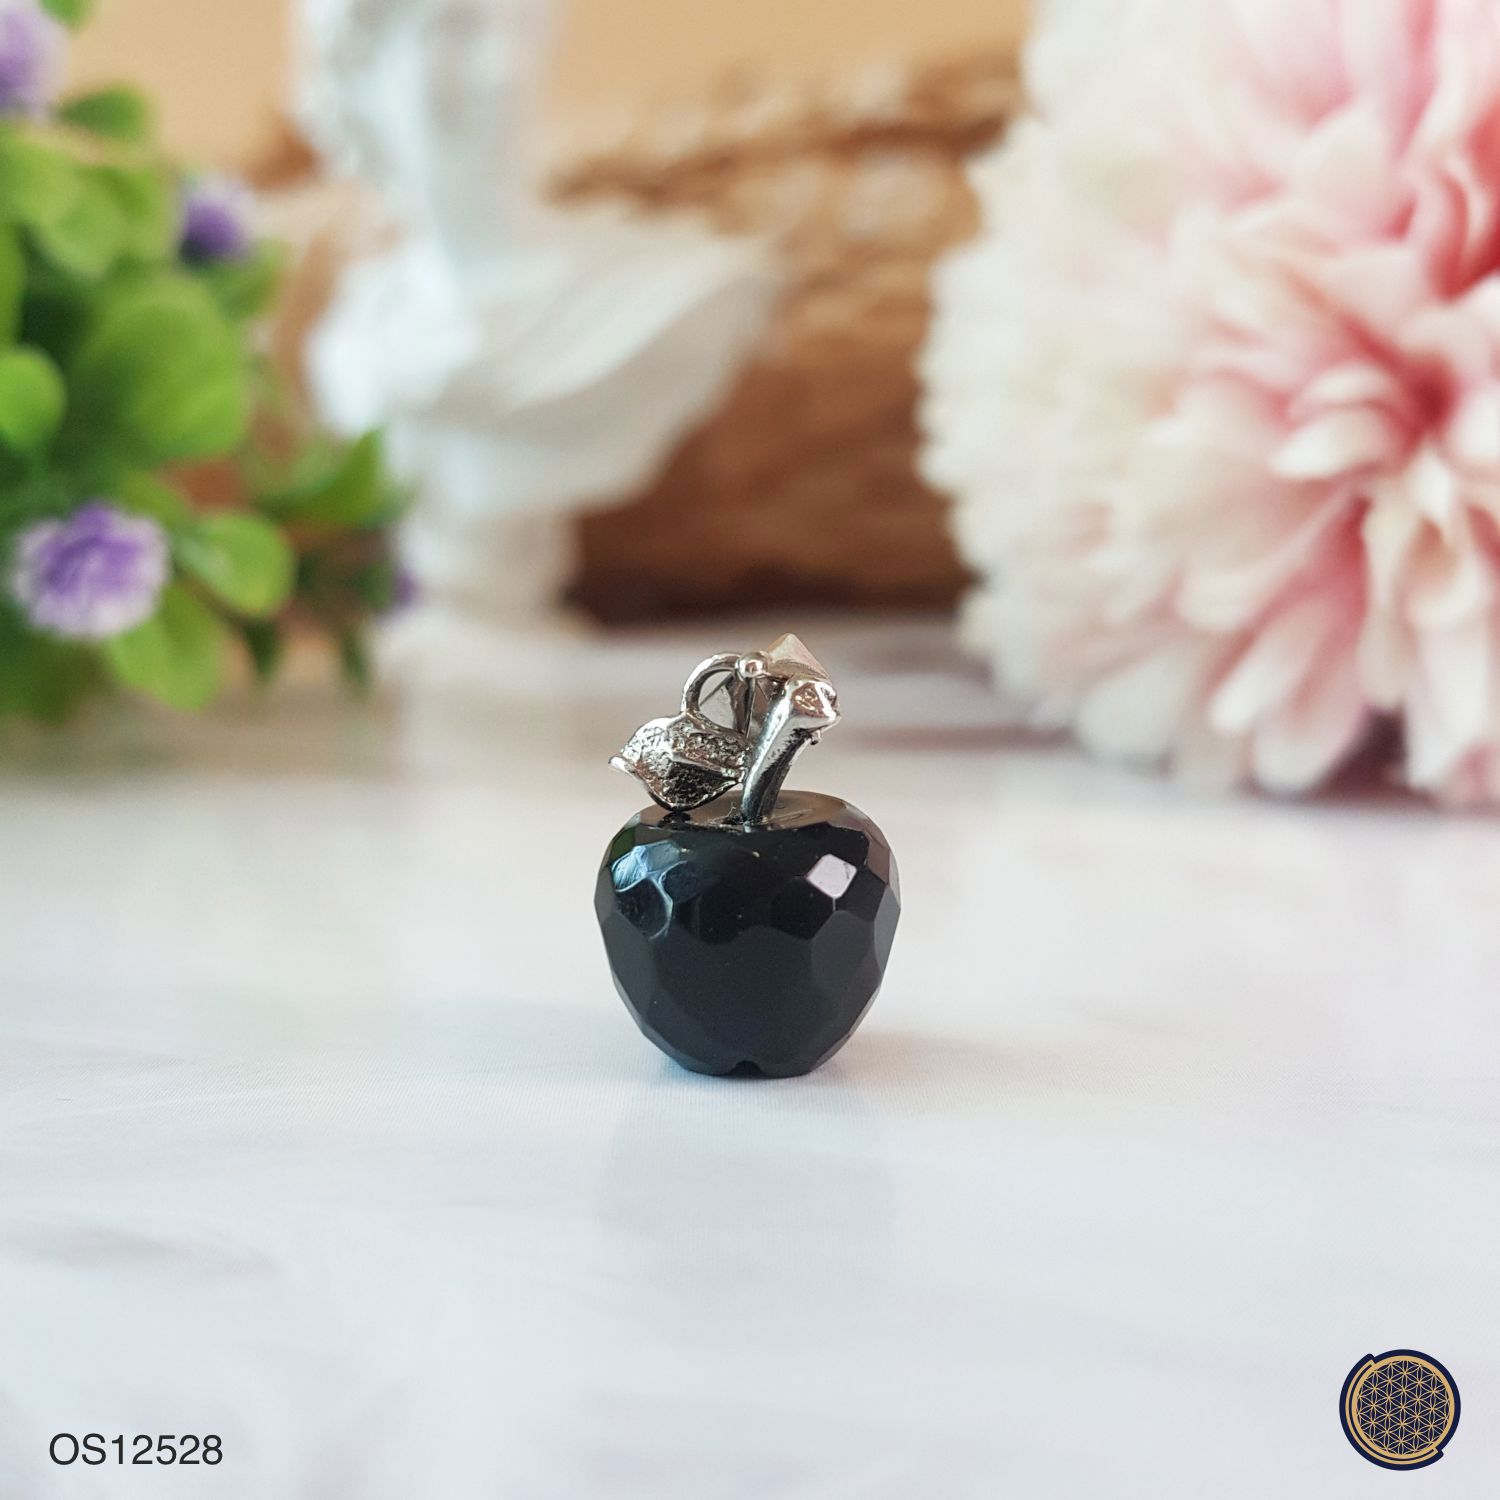 10mm Black Obsidian Apple Shape Cutting Pendant